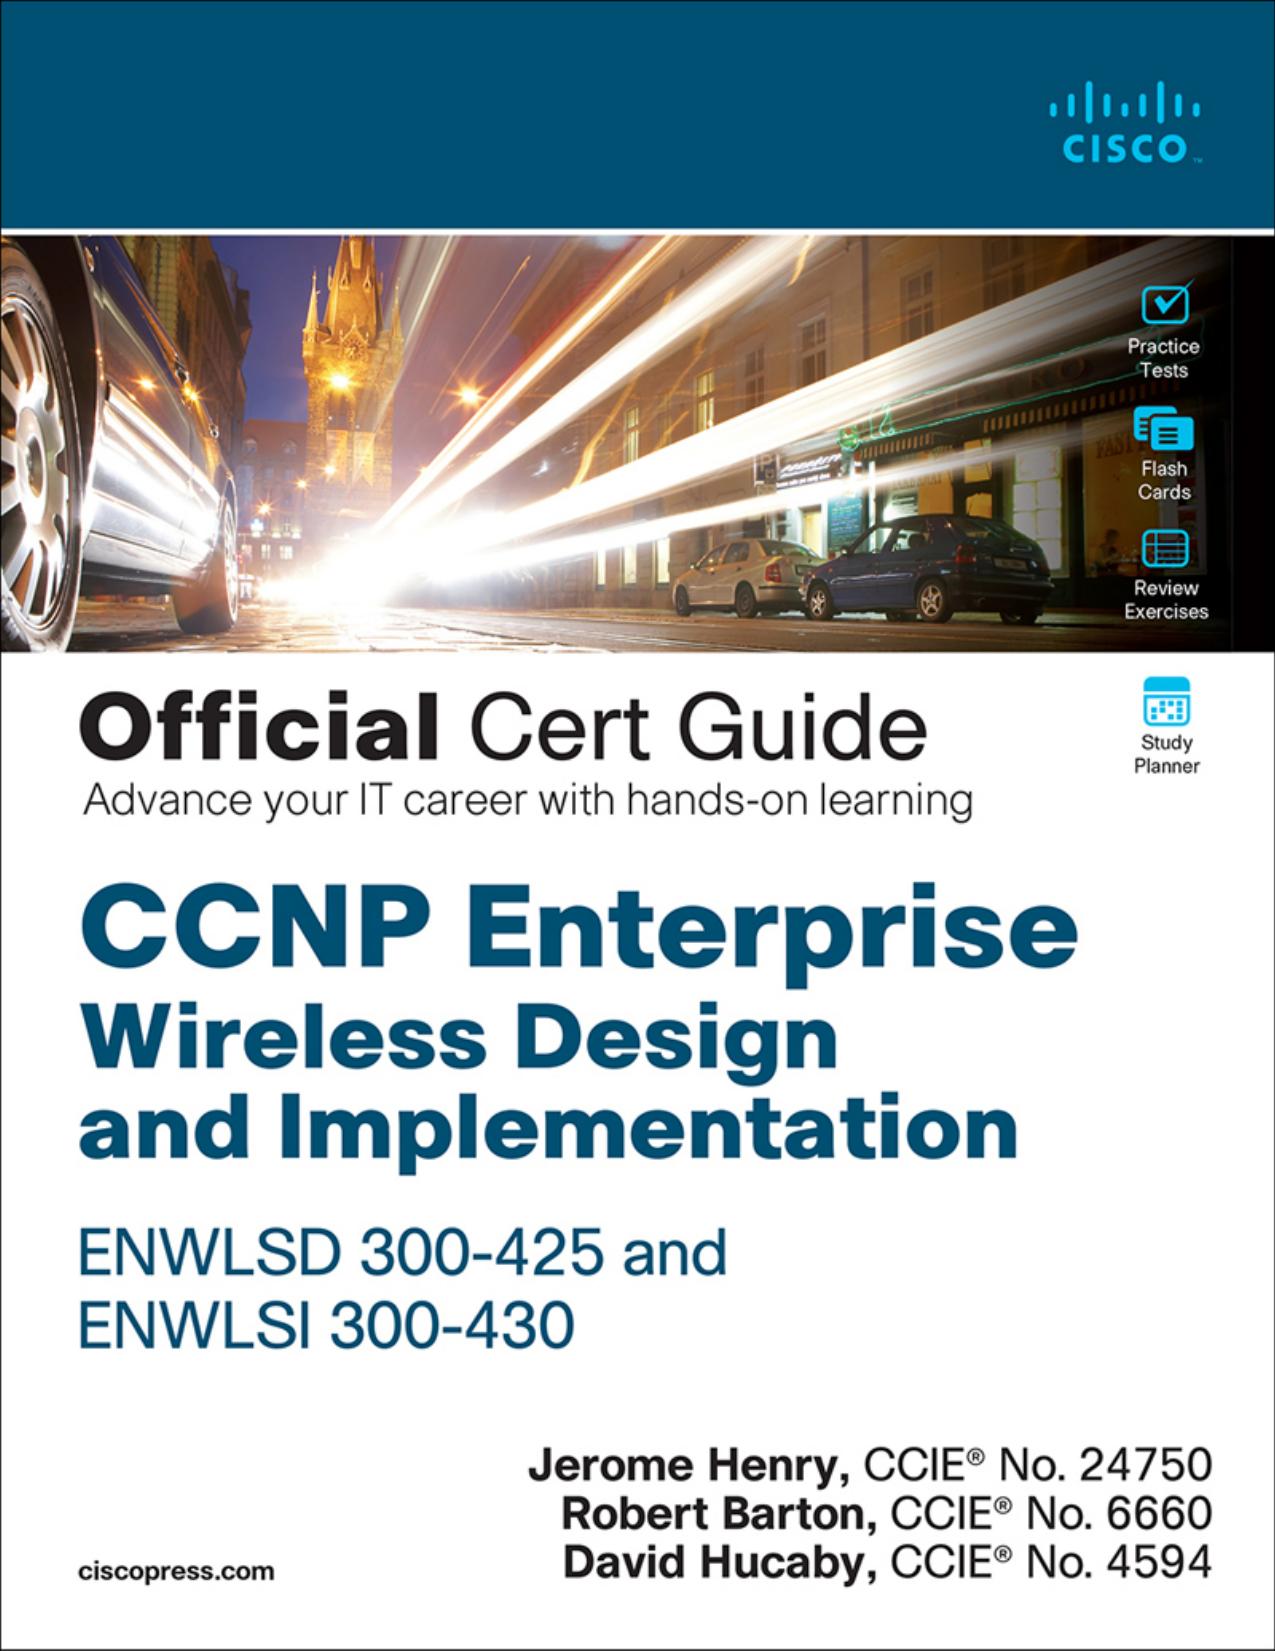 CCNP Enterprise Wireless Design ENWLSD 300-425 and Implementation ENWLSI 300-430 Official Cert Guide: Designing & Implementing Cisco Enterprise Wireless Networks by Jerome Henry & Robert Barton & David Hucaby